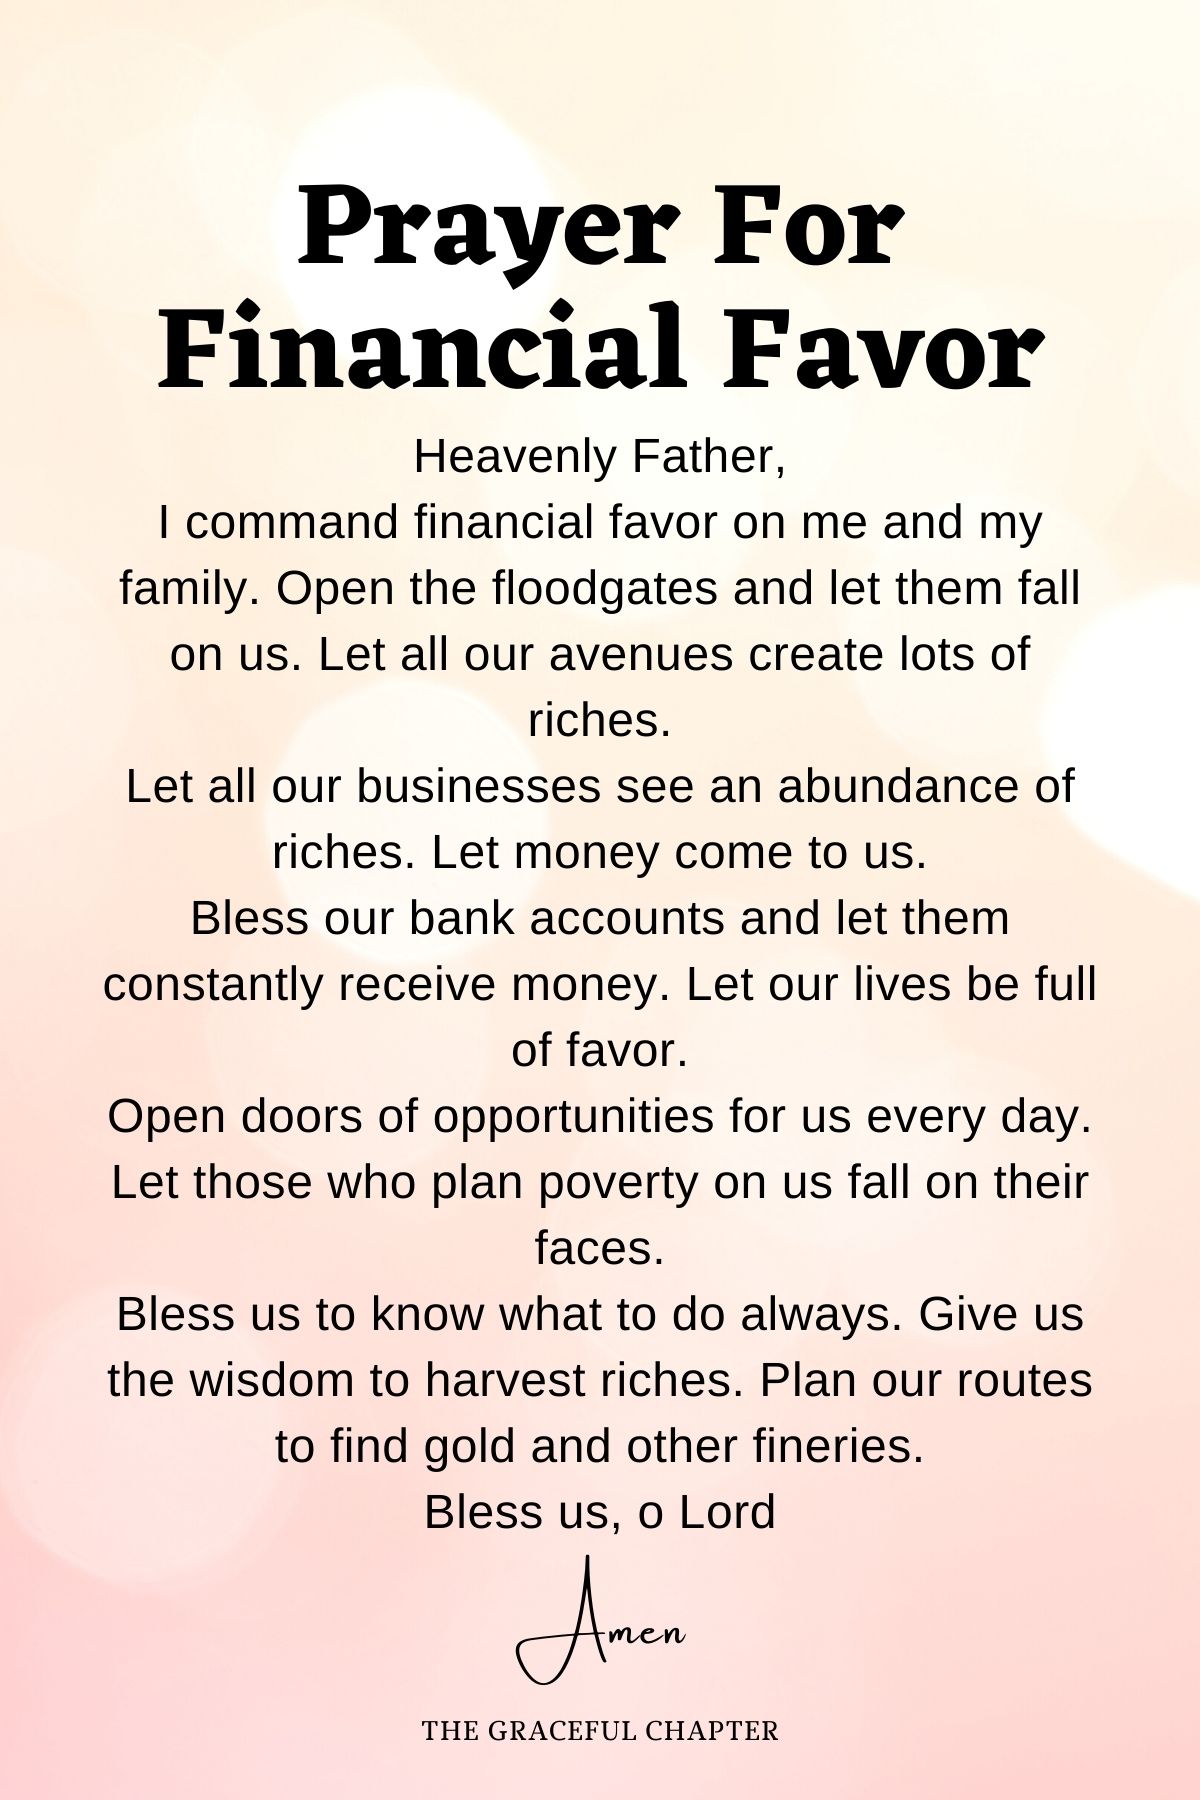 Prayer for financial favor